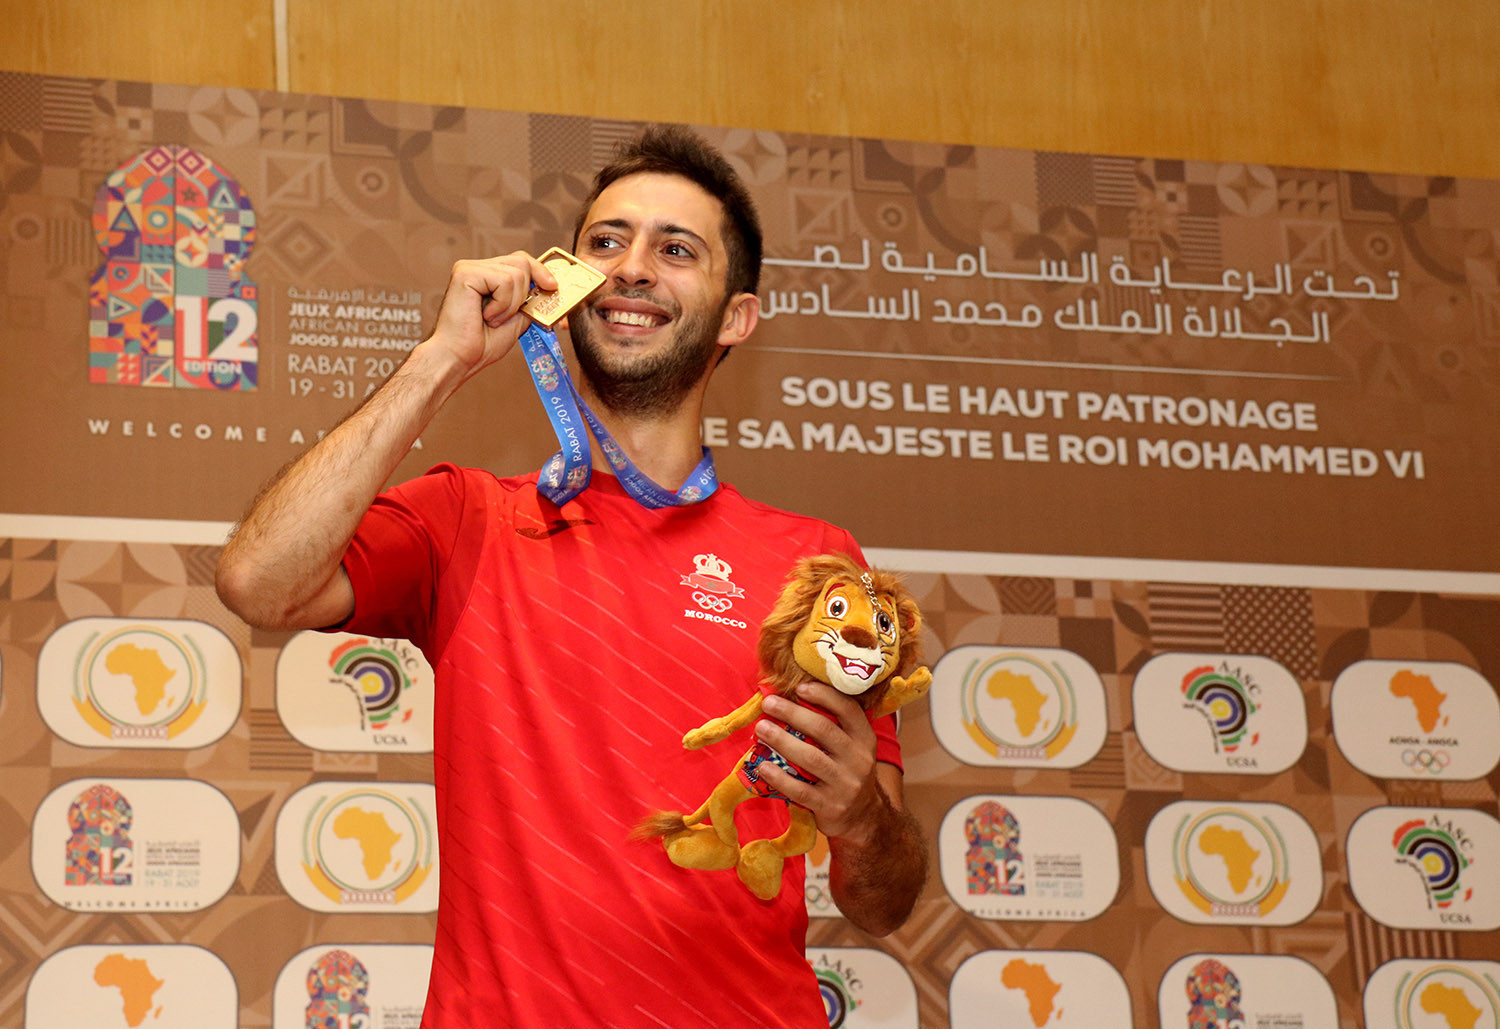 Amiri Amine won the men's event in Morocco ©WPBSA